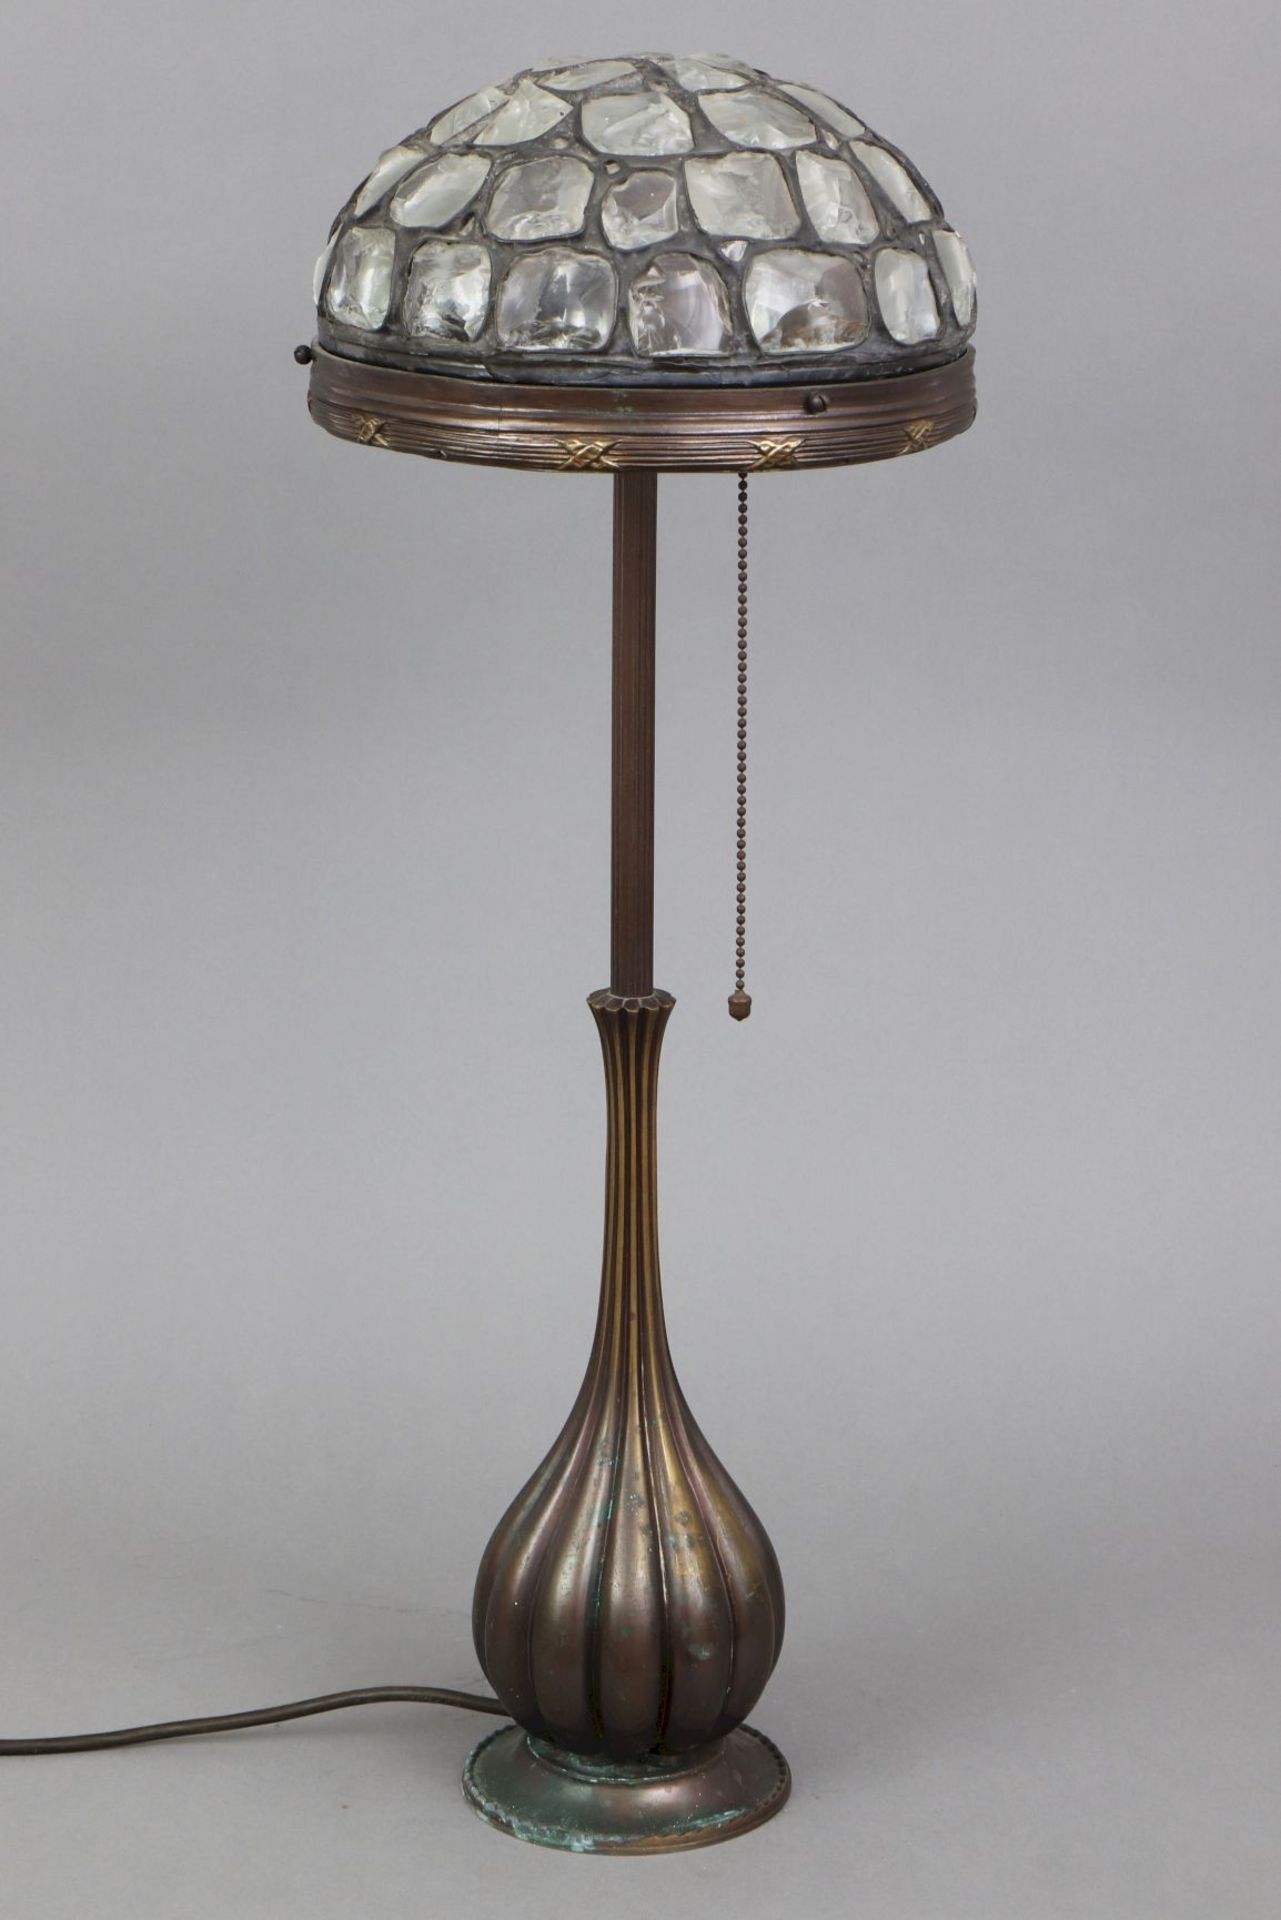 Jugendstil Tischlampe mit kuppelförmigem Glasmosaik-Schirm